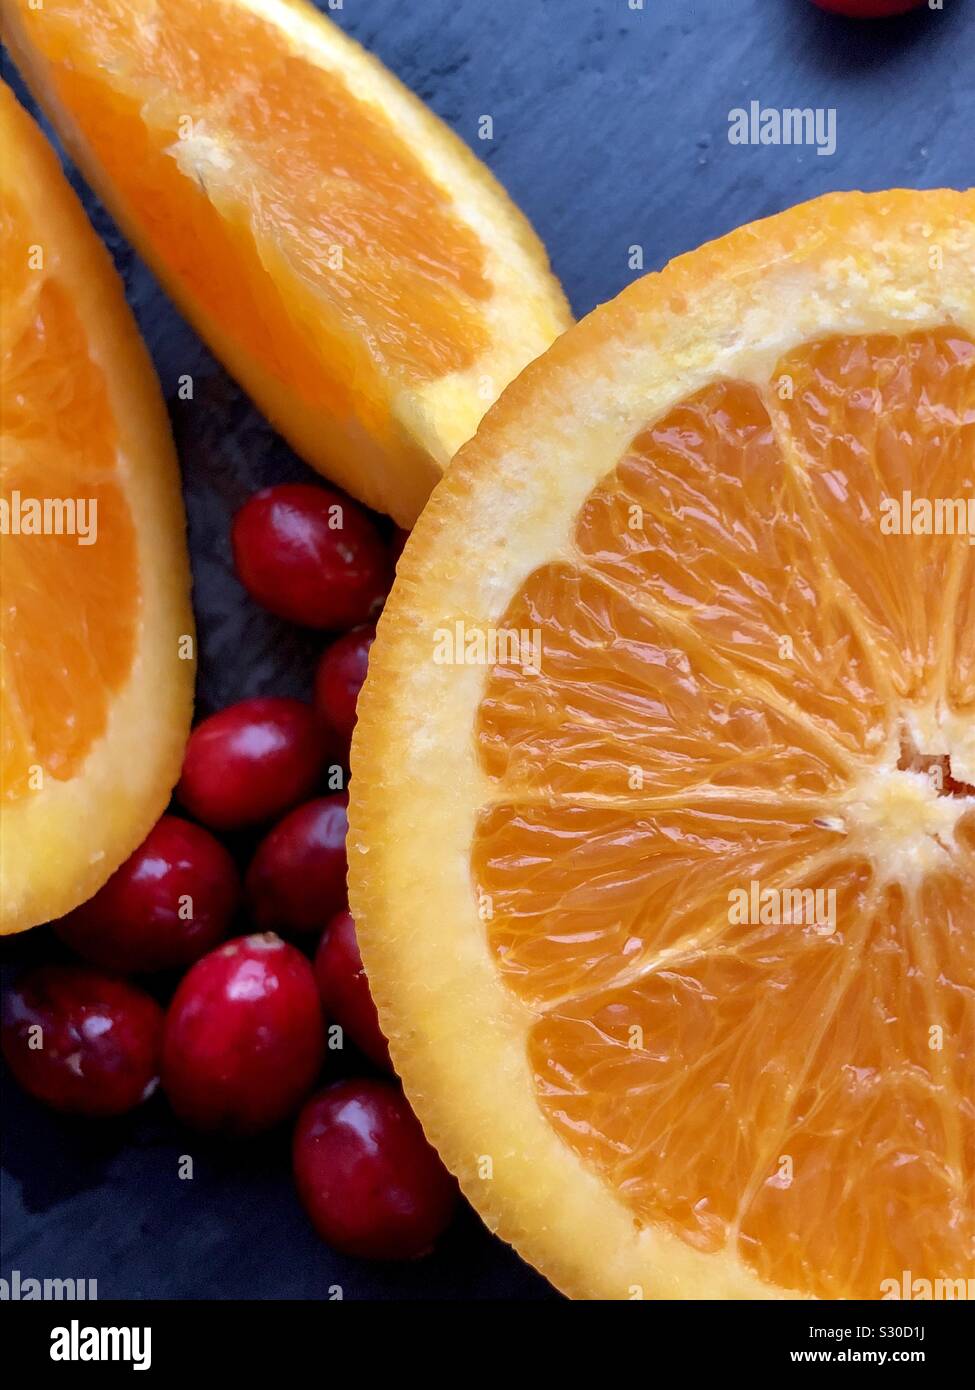 Cranberries and oranges Stock Photo